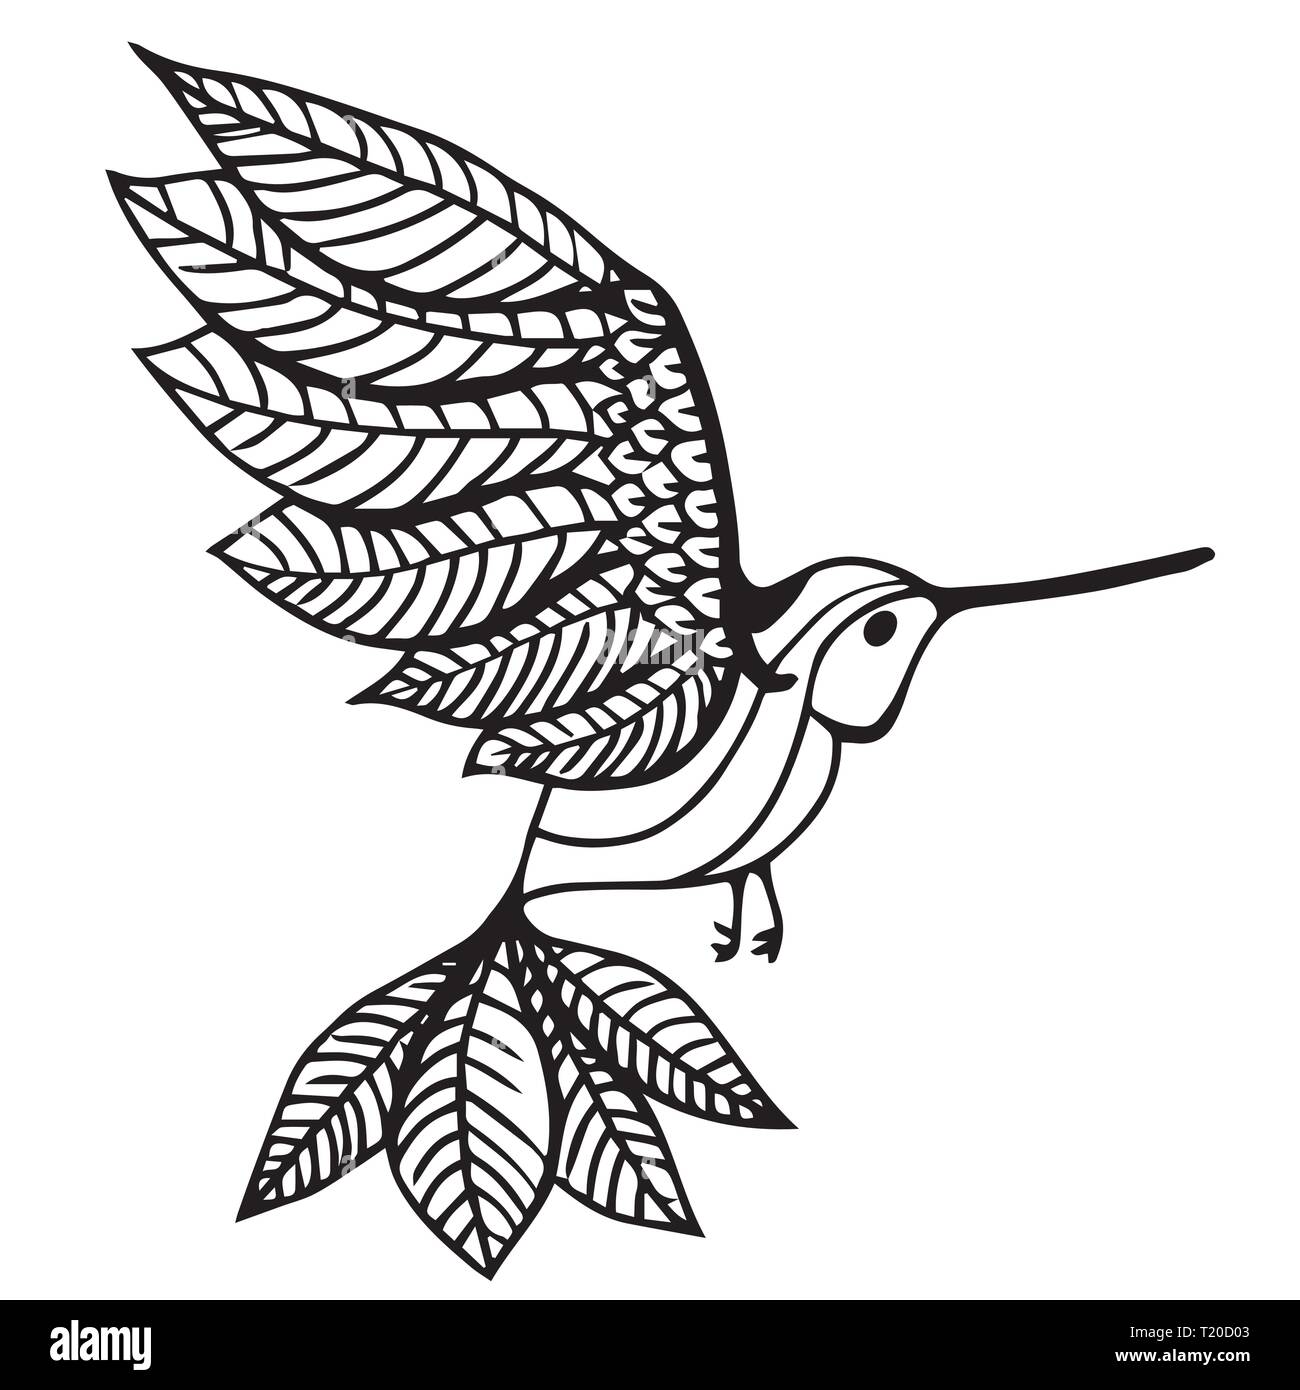 Hummingbird illustrazione vettoriale isolati su sfondo bianco Illustrazione Vettoriale